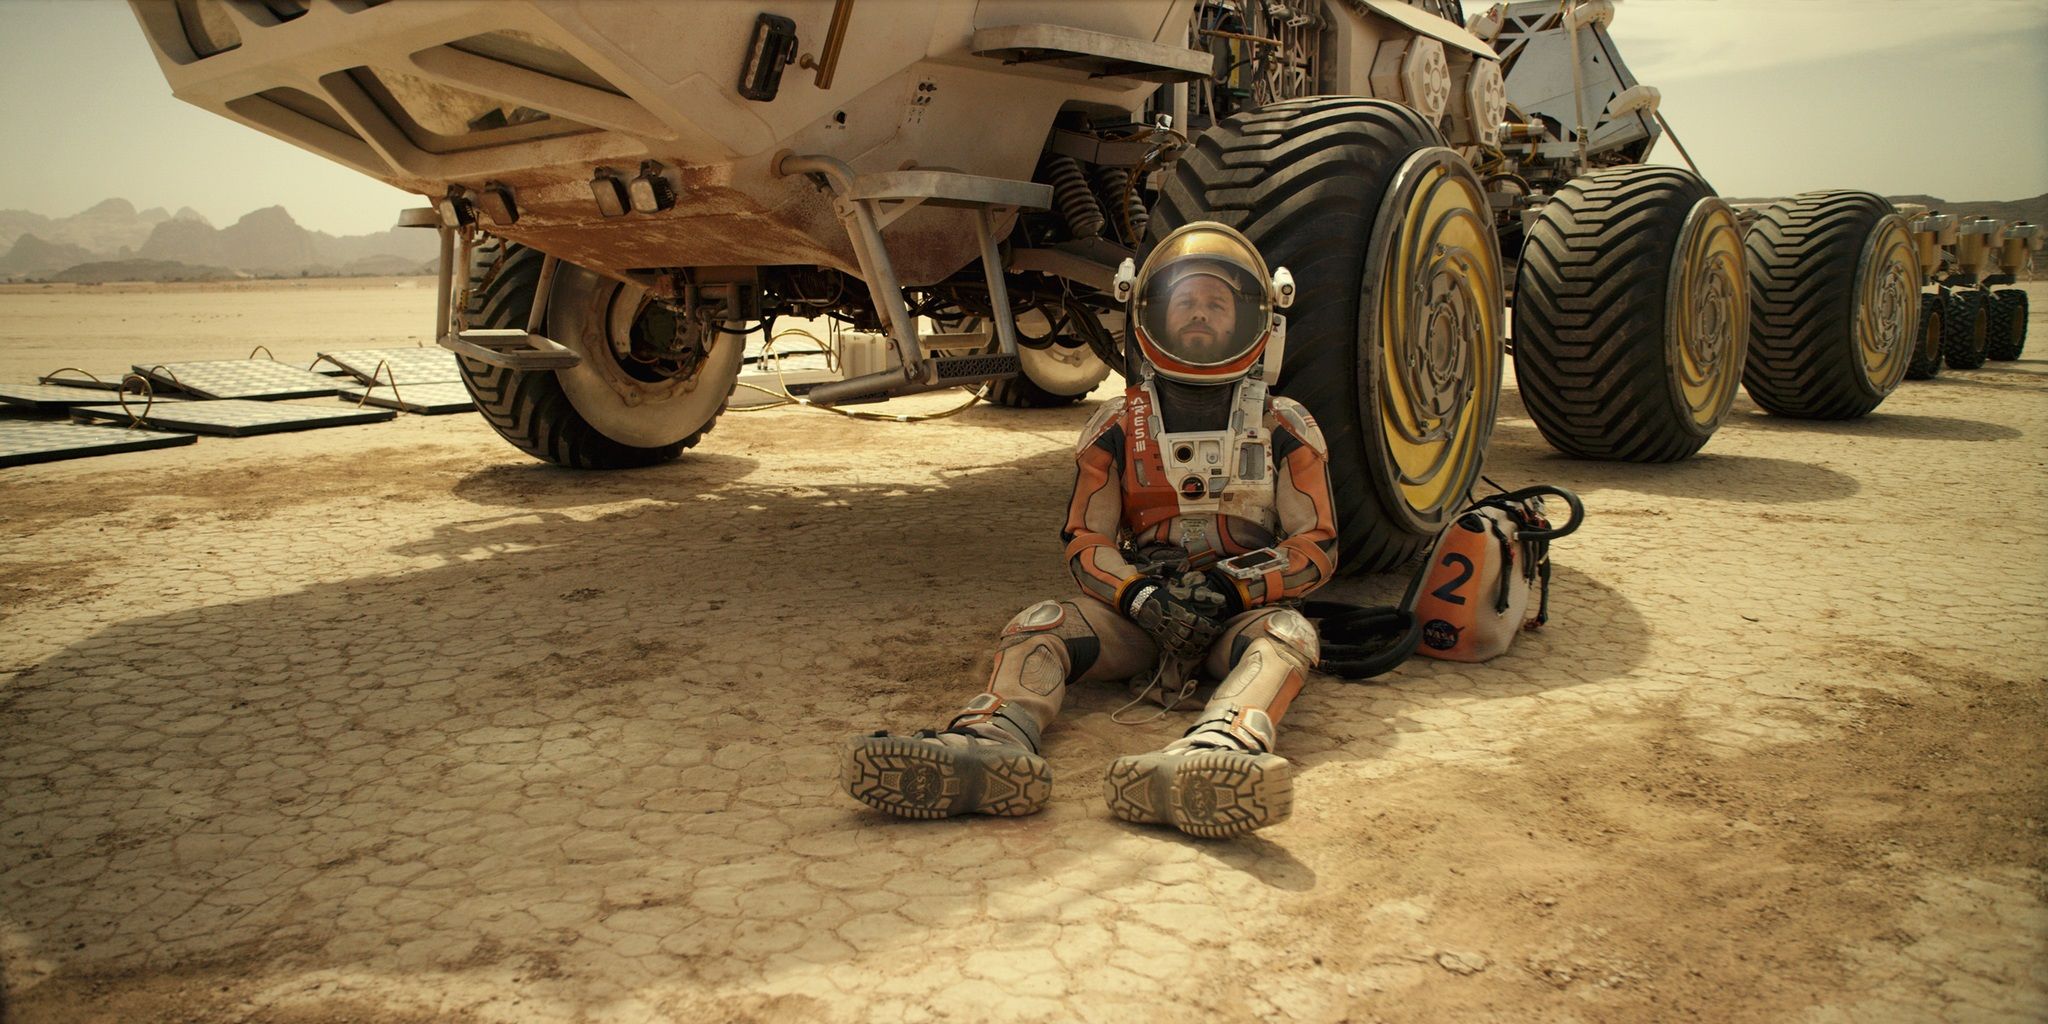 Matt Damon as Mark Watney sitting against a rover on Mars in The Martian